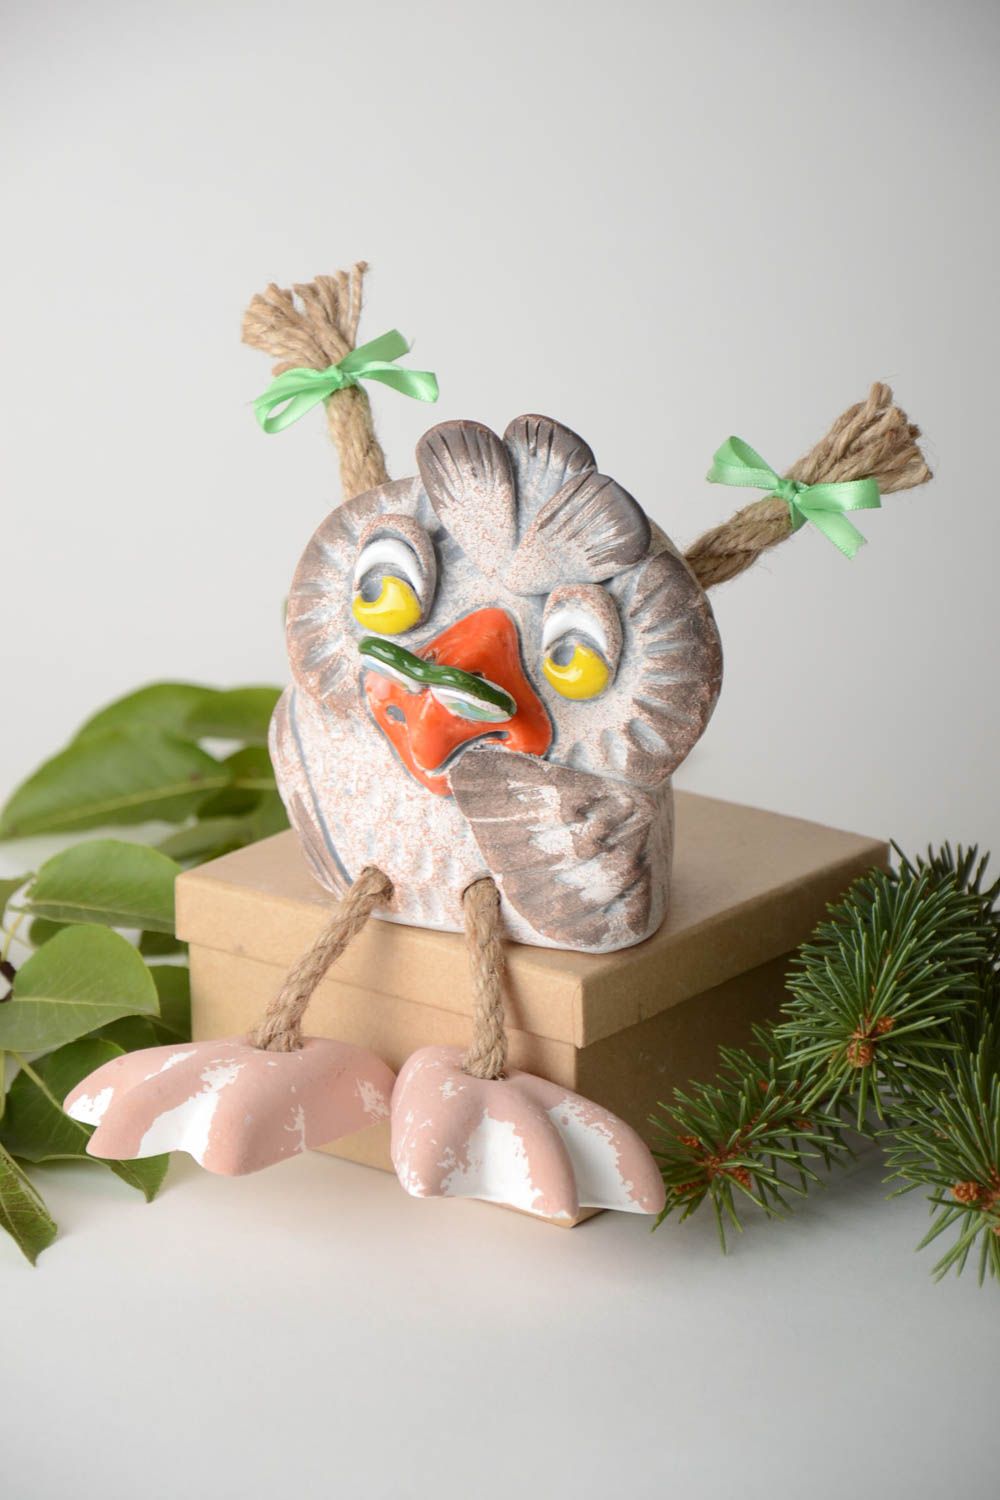 Unusual handmade ceramic figurine best toys for kids ceramic moneybox gift ideas photo 1